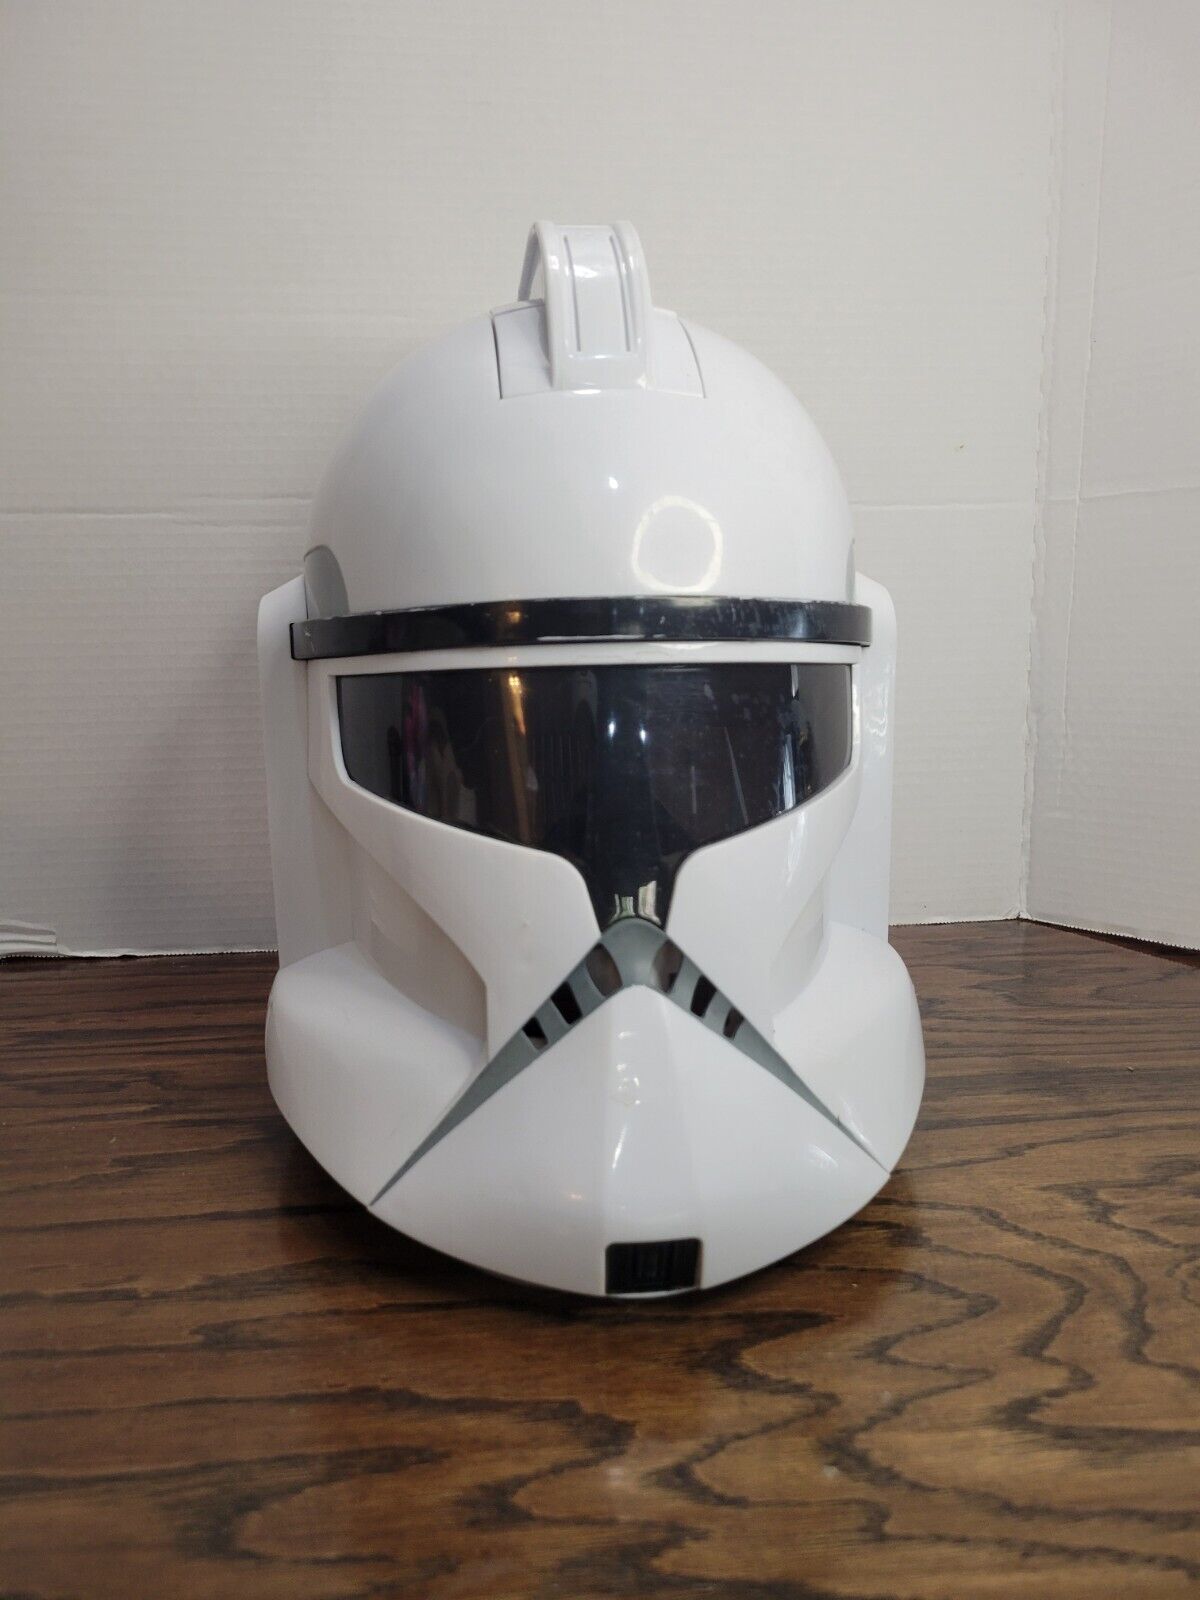 2008 Hasbro Star Wars Clone Storm Trooper Talking Voice Changer Helmet Costume